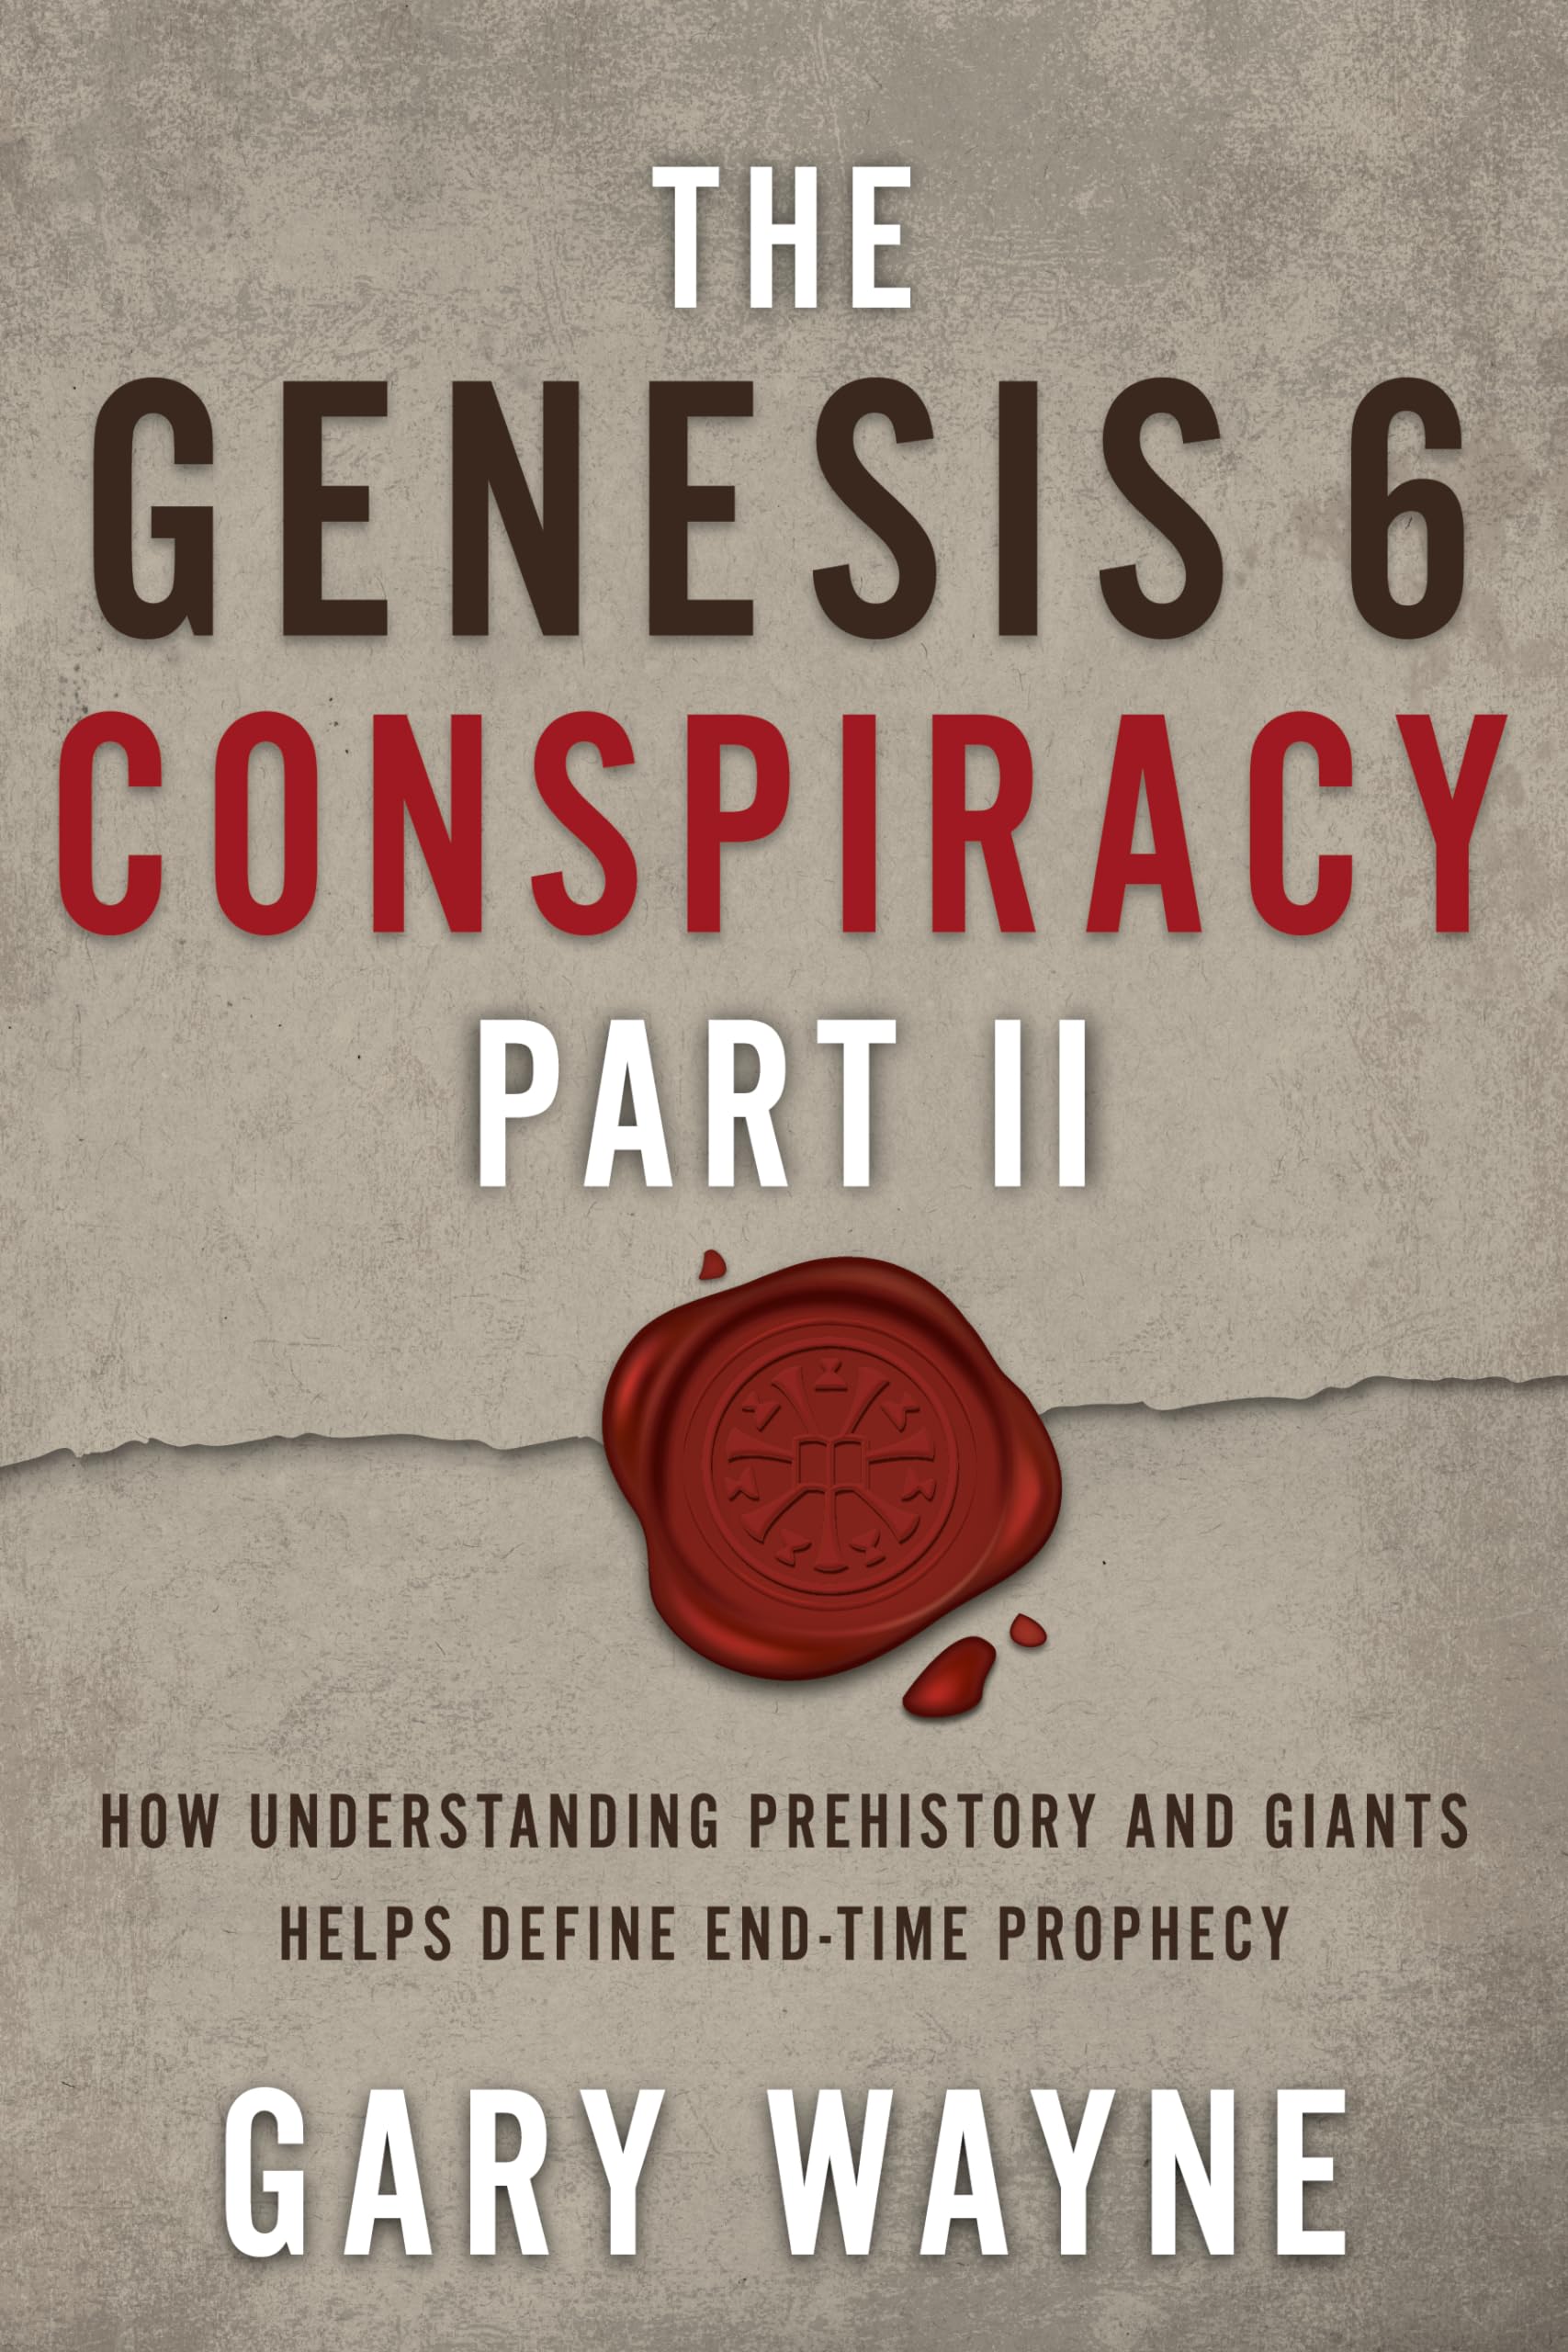 The Genesis 6 Conspiracy Part II: How Understanding Prehistory and Giants Helps Define End-Time Prophecy (GARY WAYNE'S GENESIS 6 CONSPIRACY Book 2)